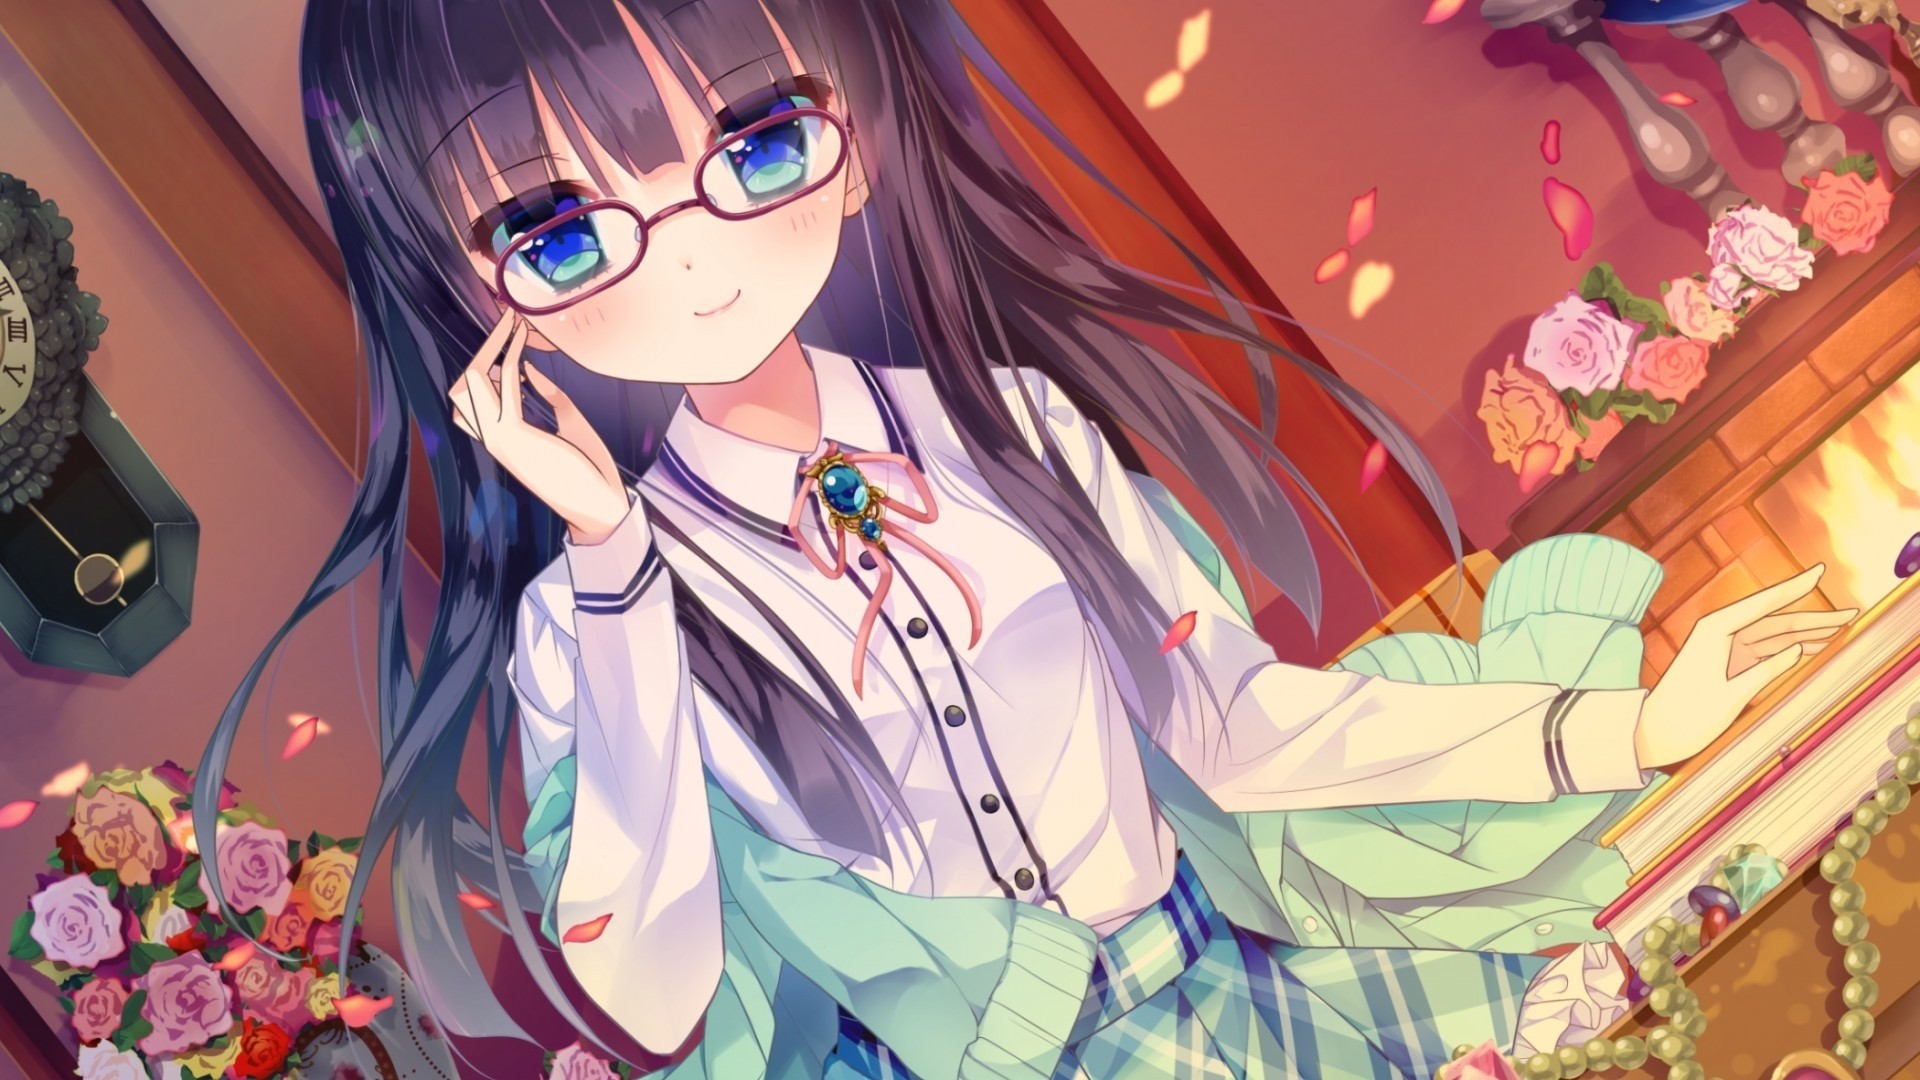 Anime Girl With Glasses Wallpaper